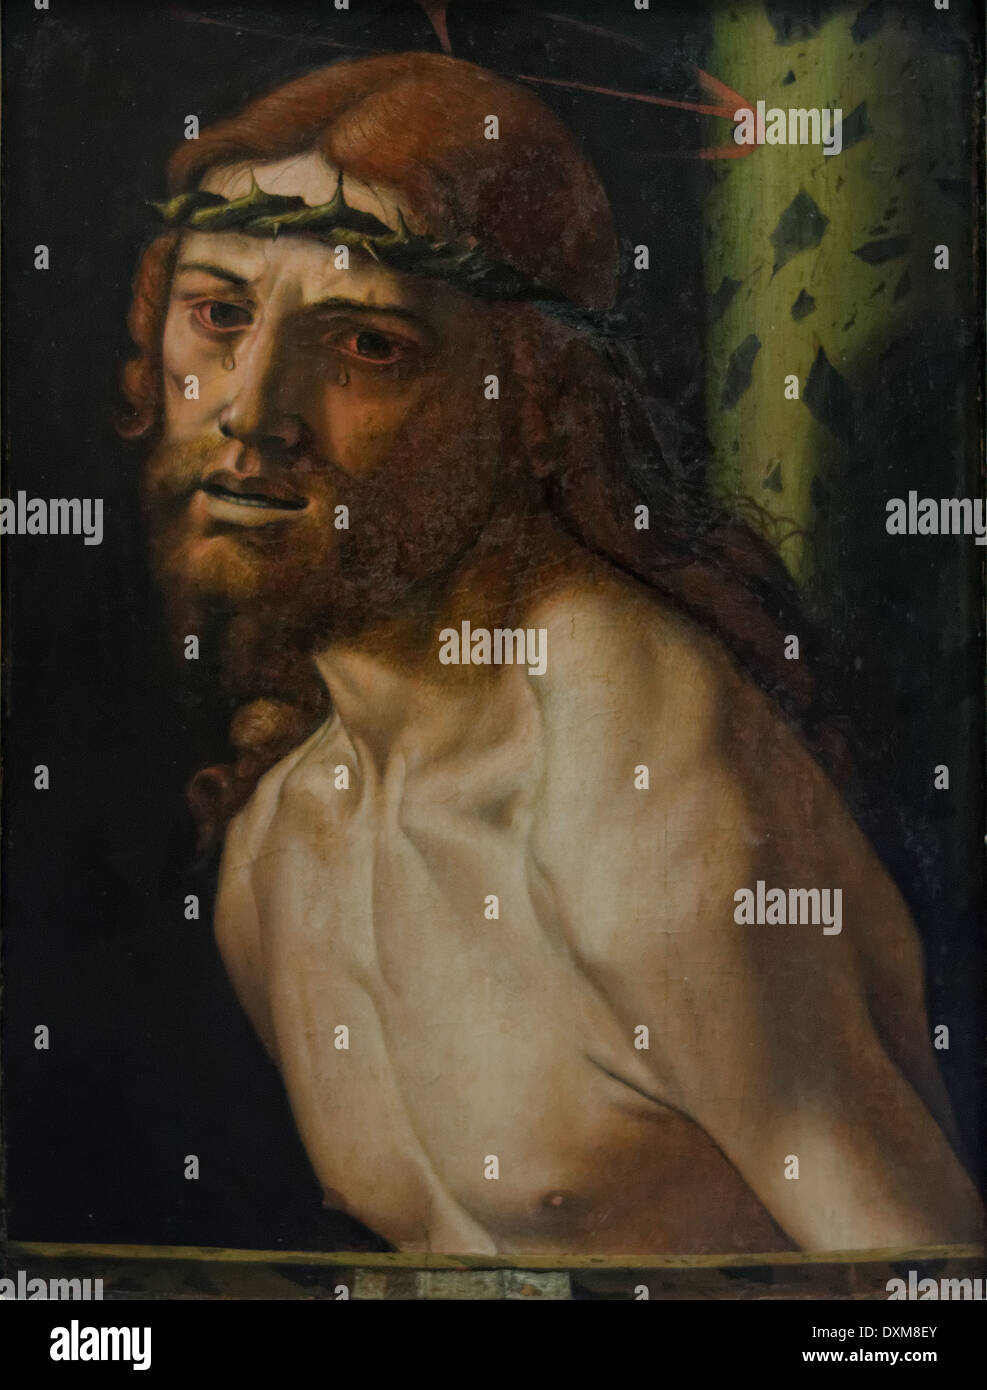 Bartolomeo Montagna - Cristo en la picota - 1500 - Siglo XVI - escuela de italiano - Gemäldegalerie - Berlín Foto de stock